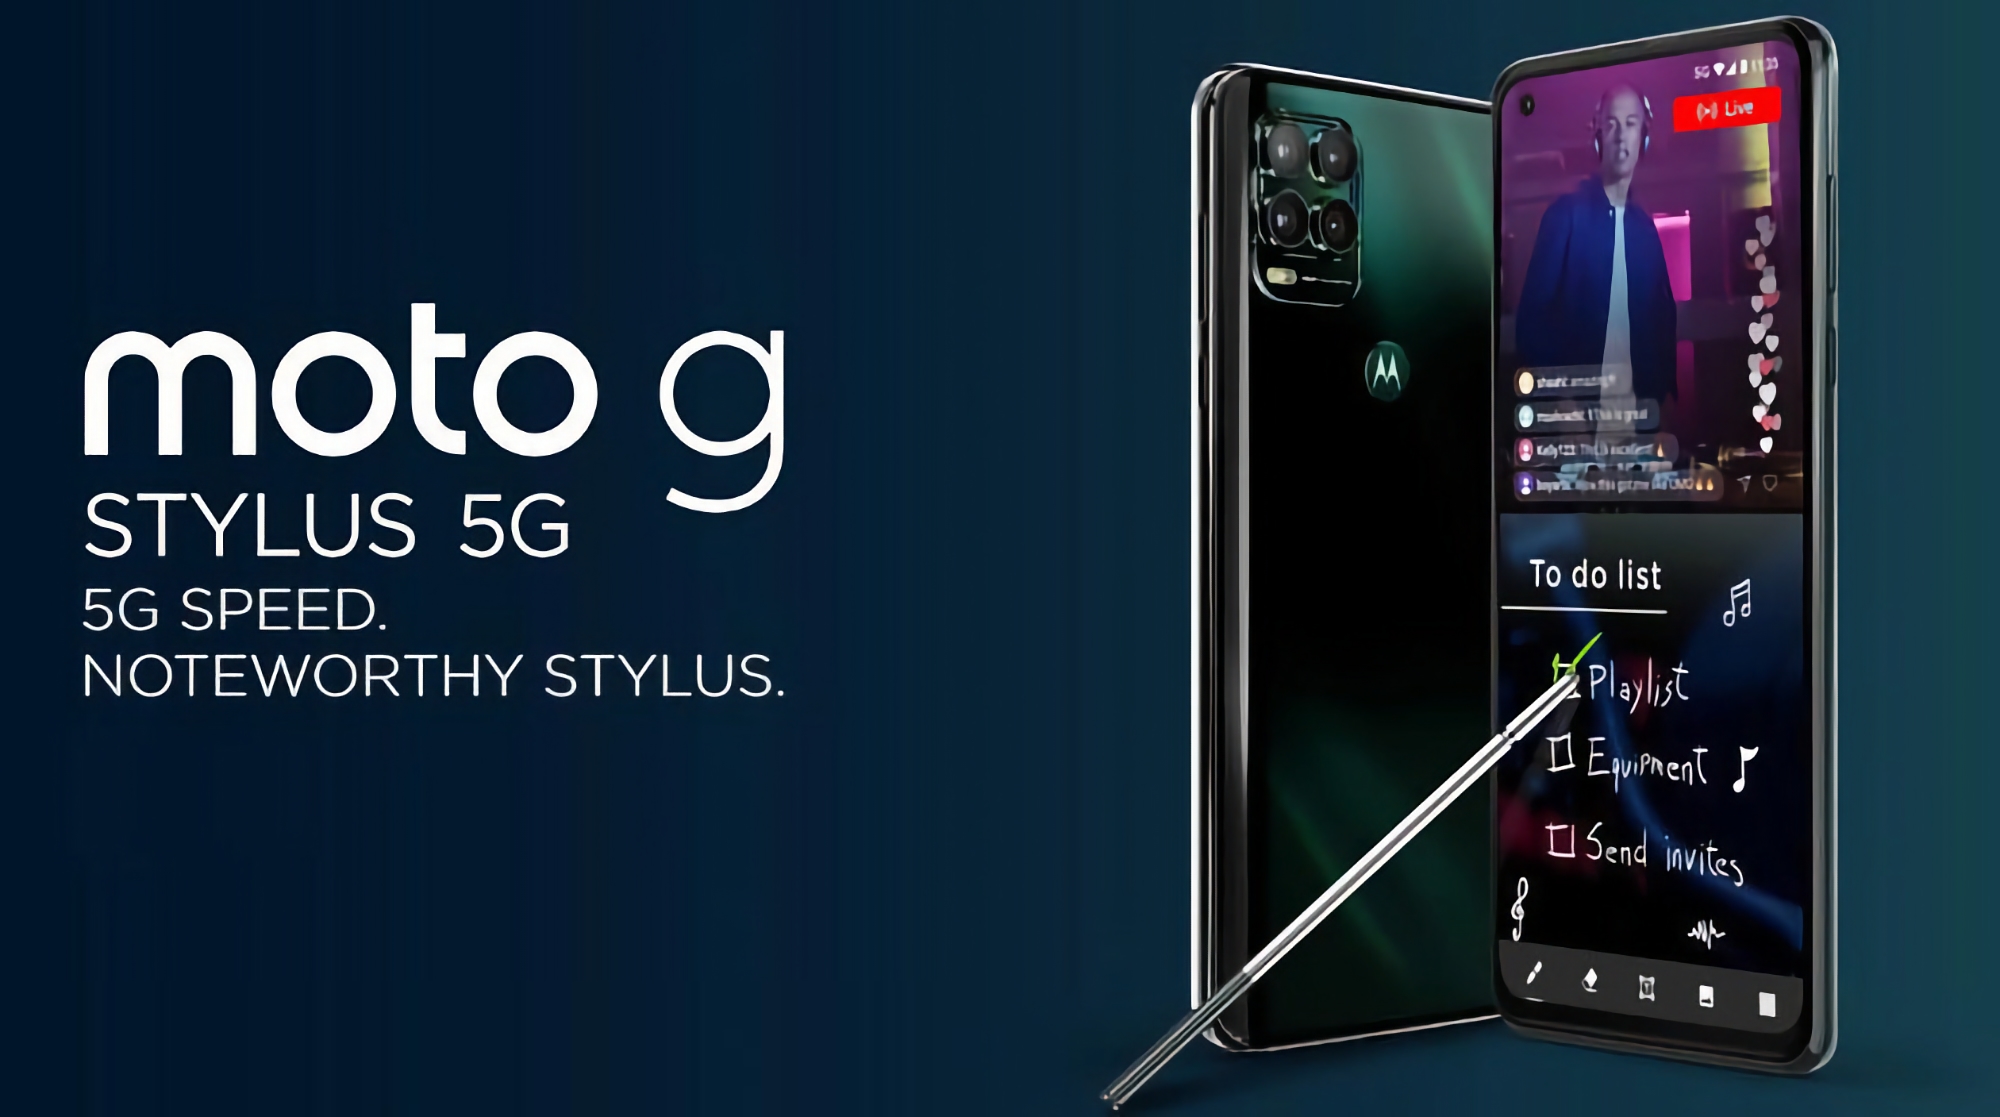 Moto G Stylus 5G, 2021, 2-Day Battery, Unlocked 6/256GB, 48MP Camera